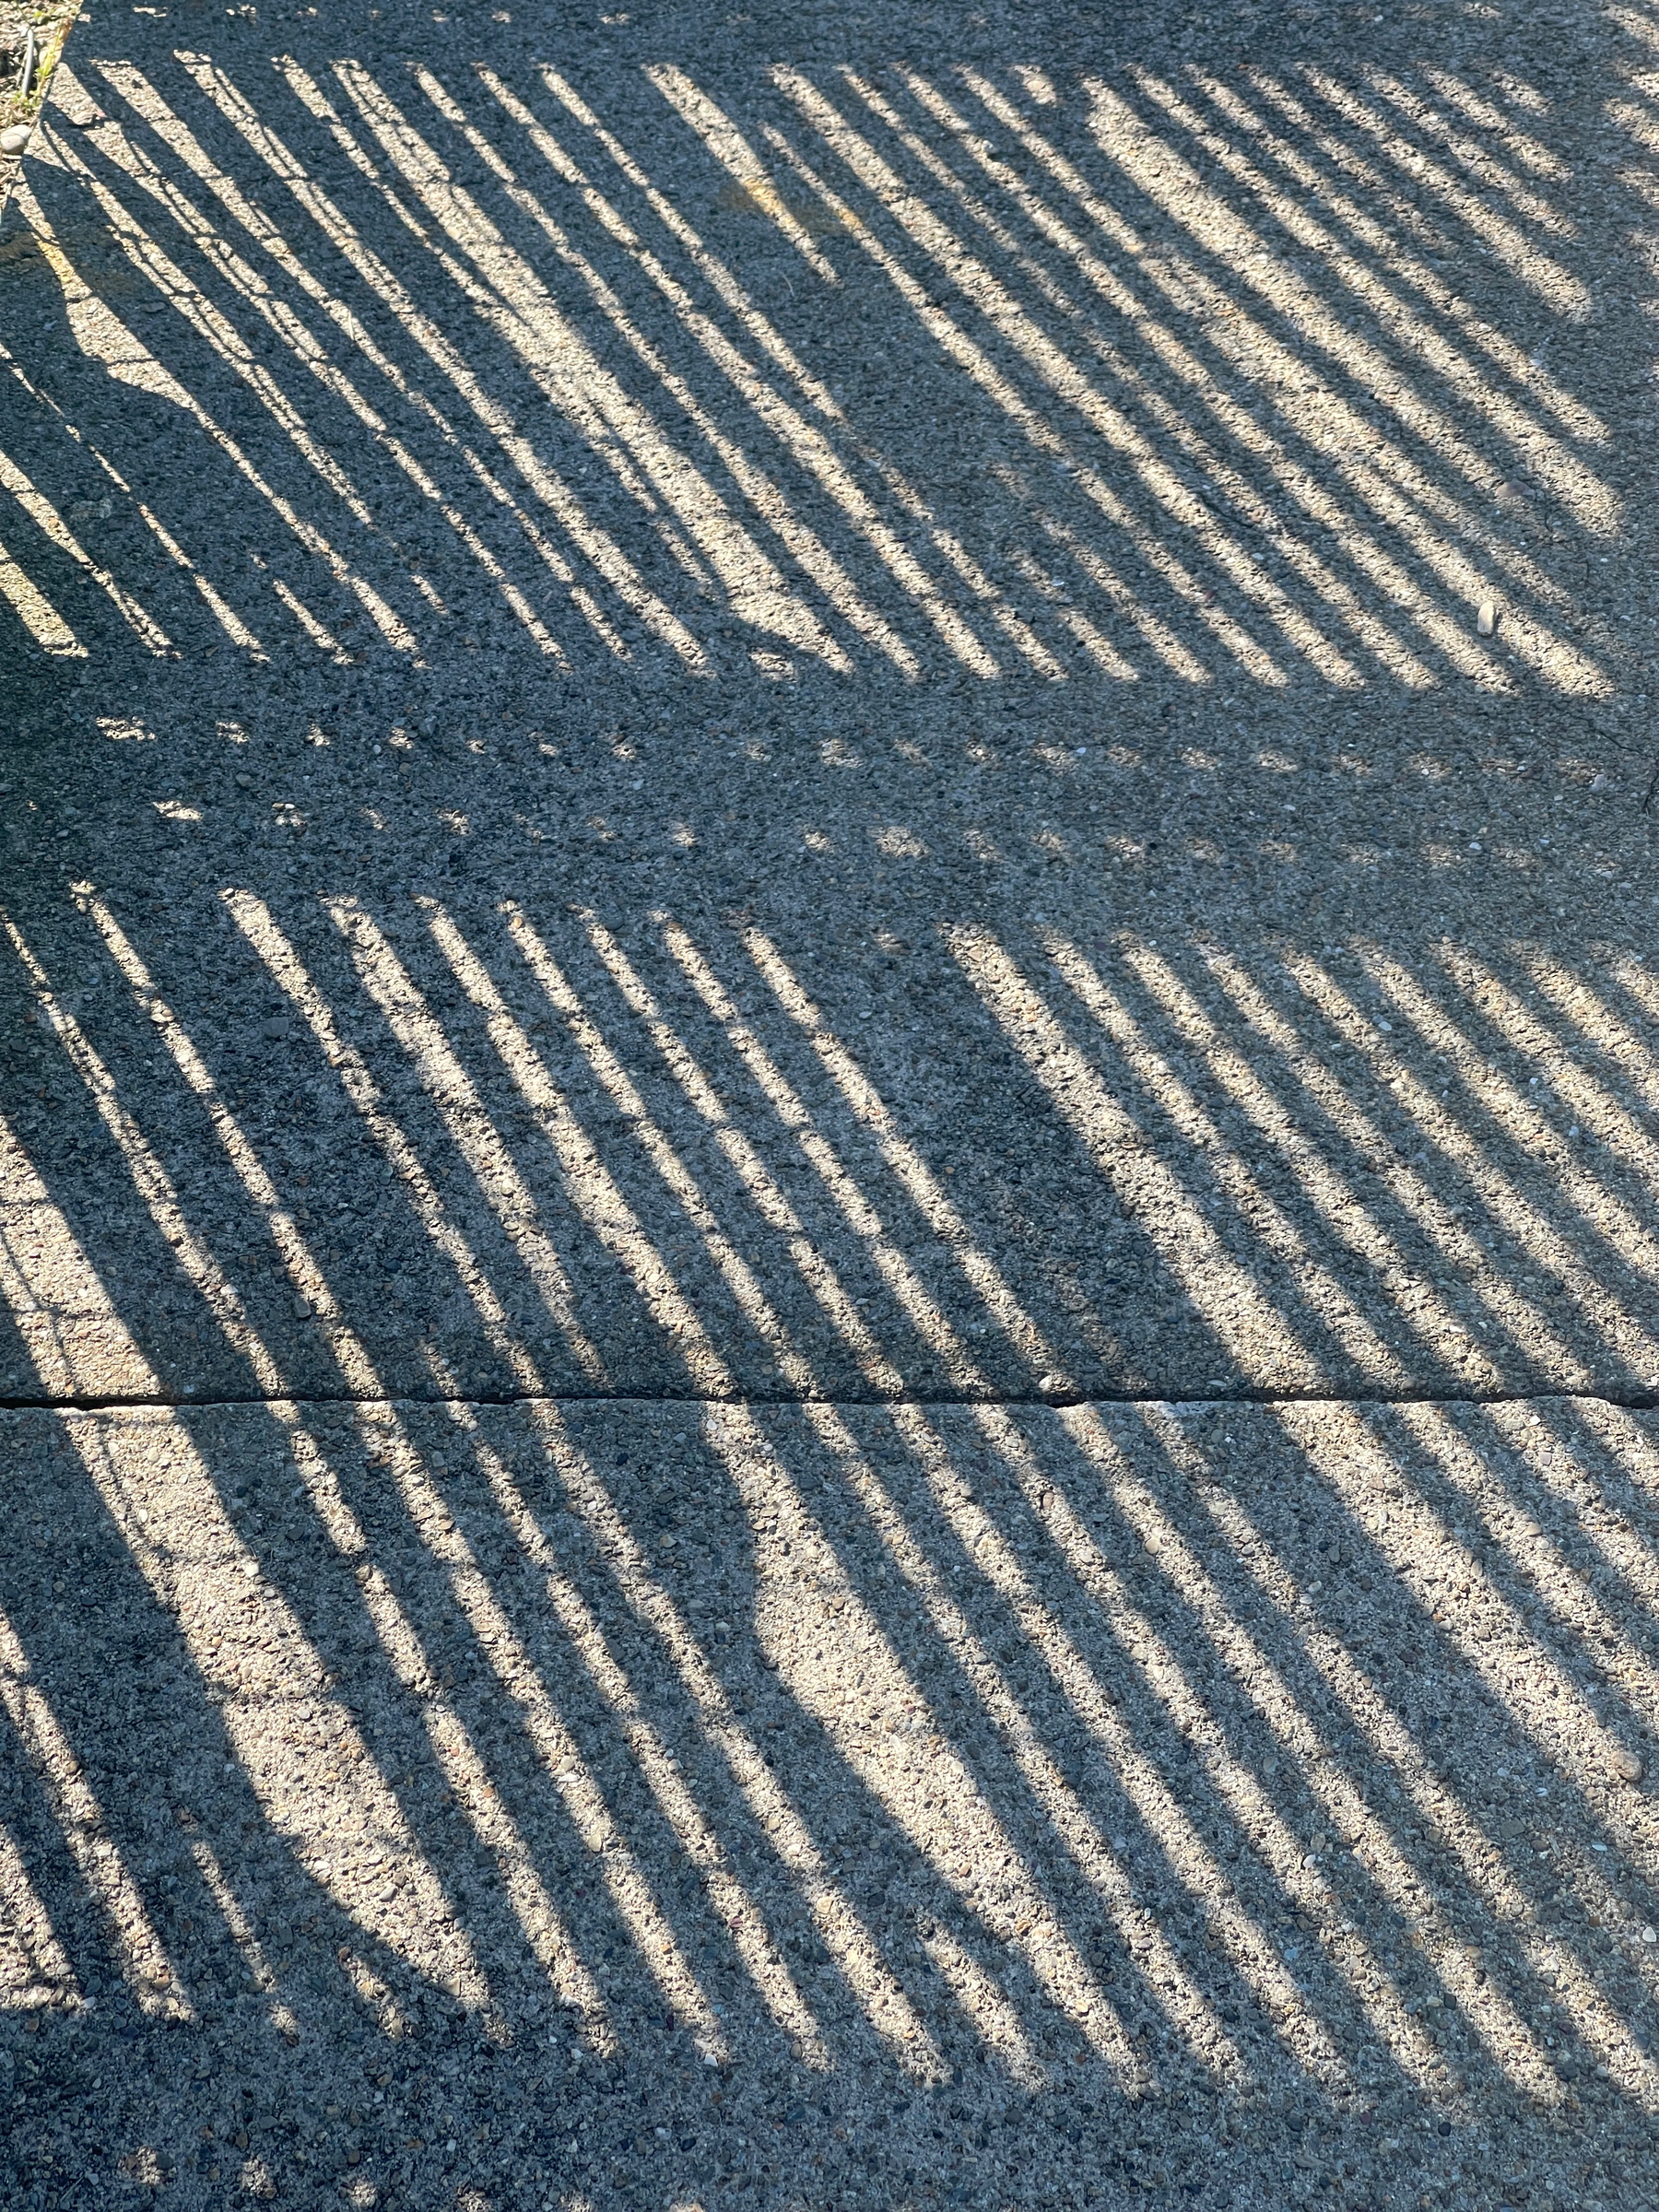 Shadows from a fence on concrete sidewalk.